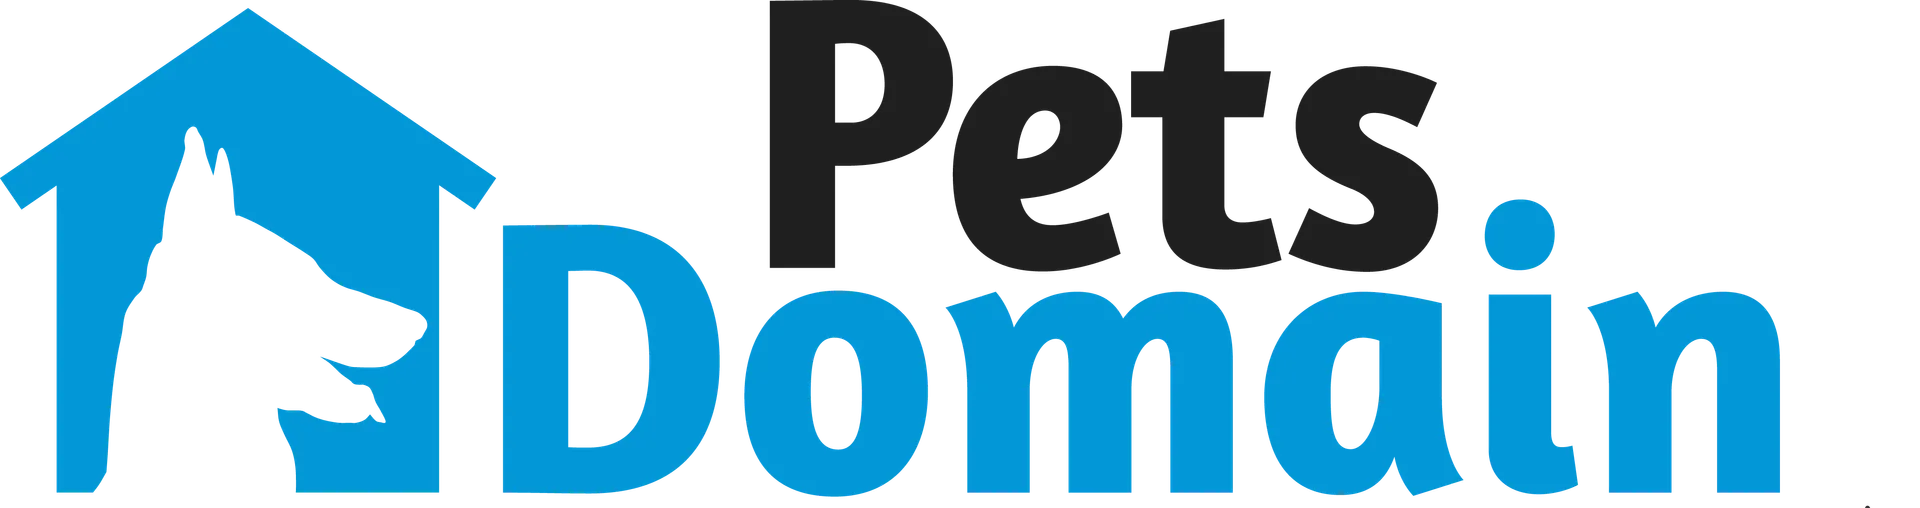 PETS DOMAIN logo of current catalogue